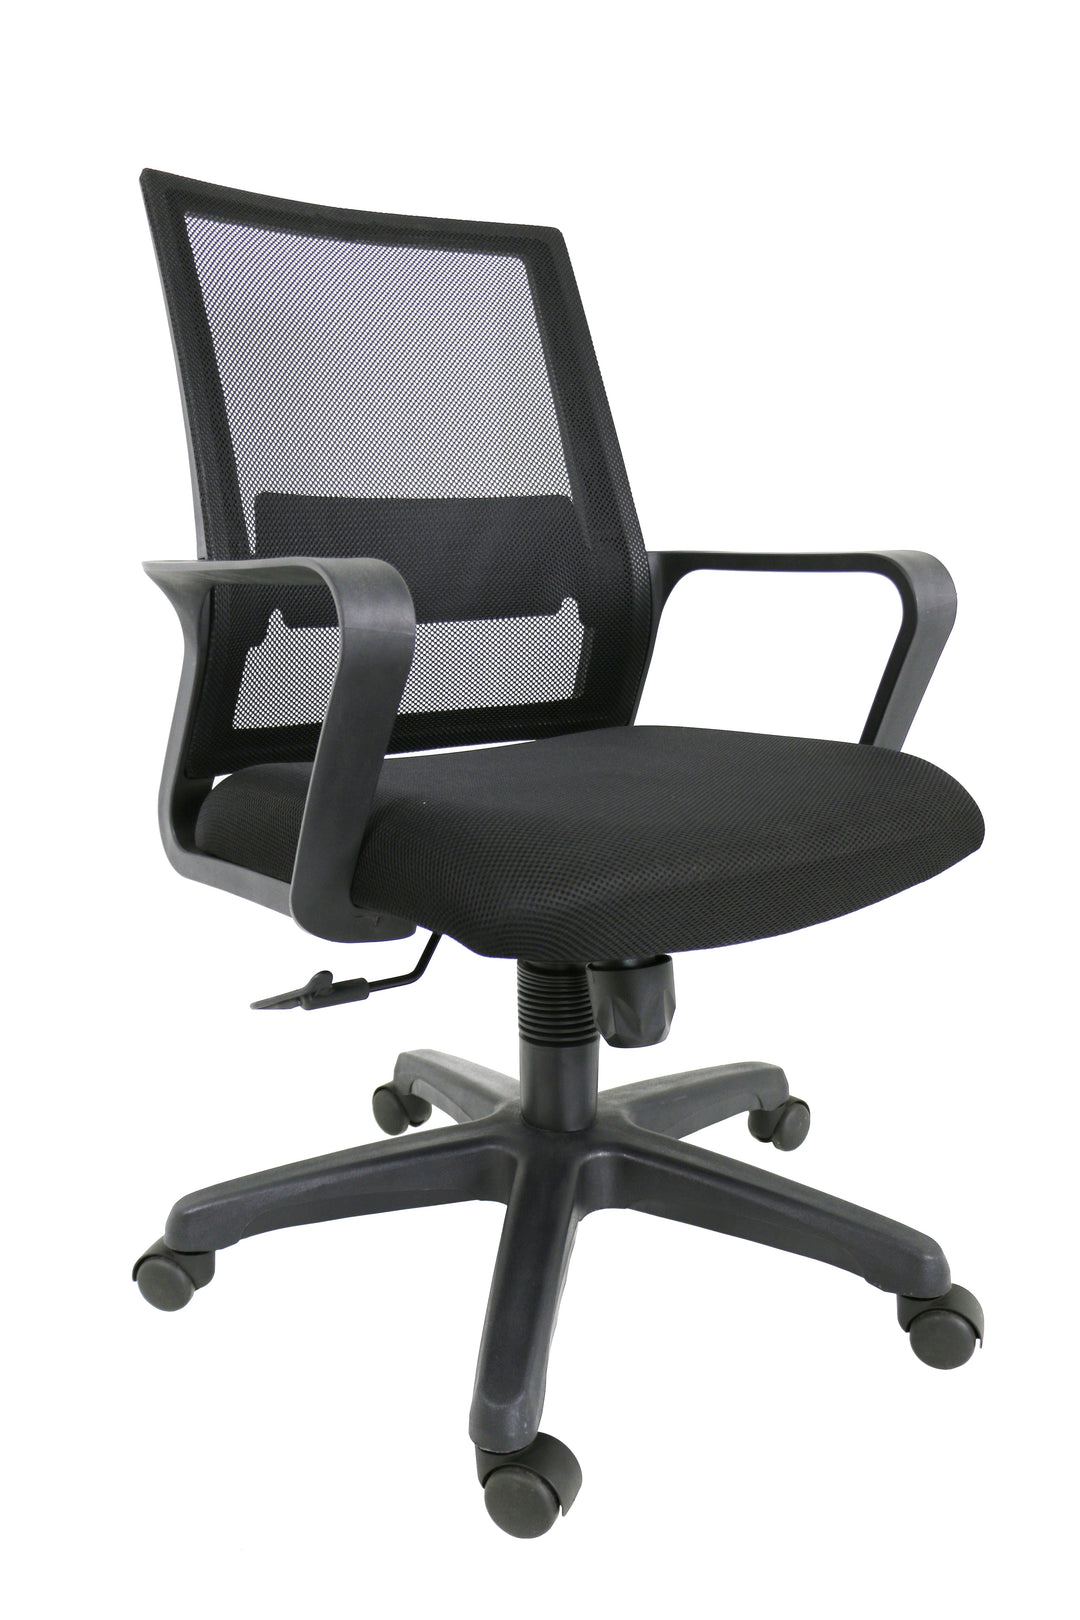 MONO MAX Mesh Office Chair